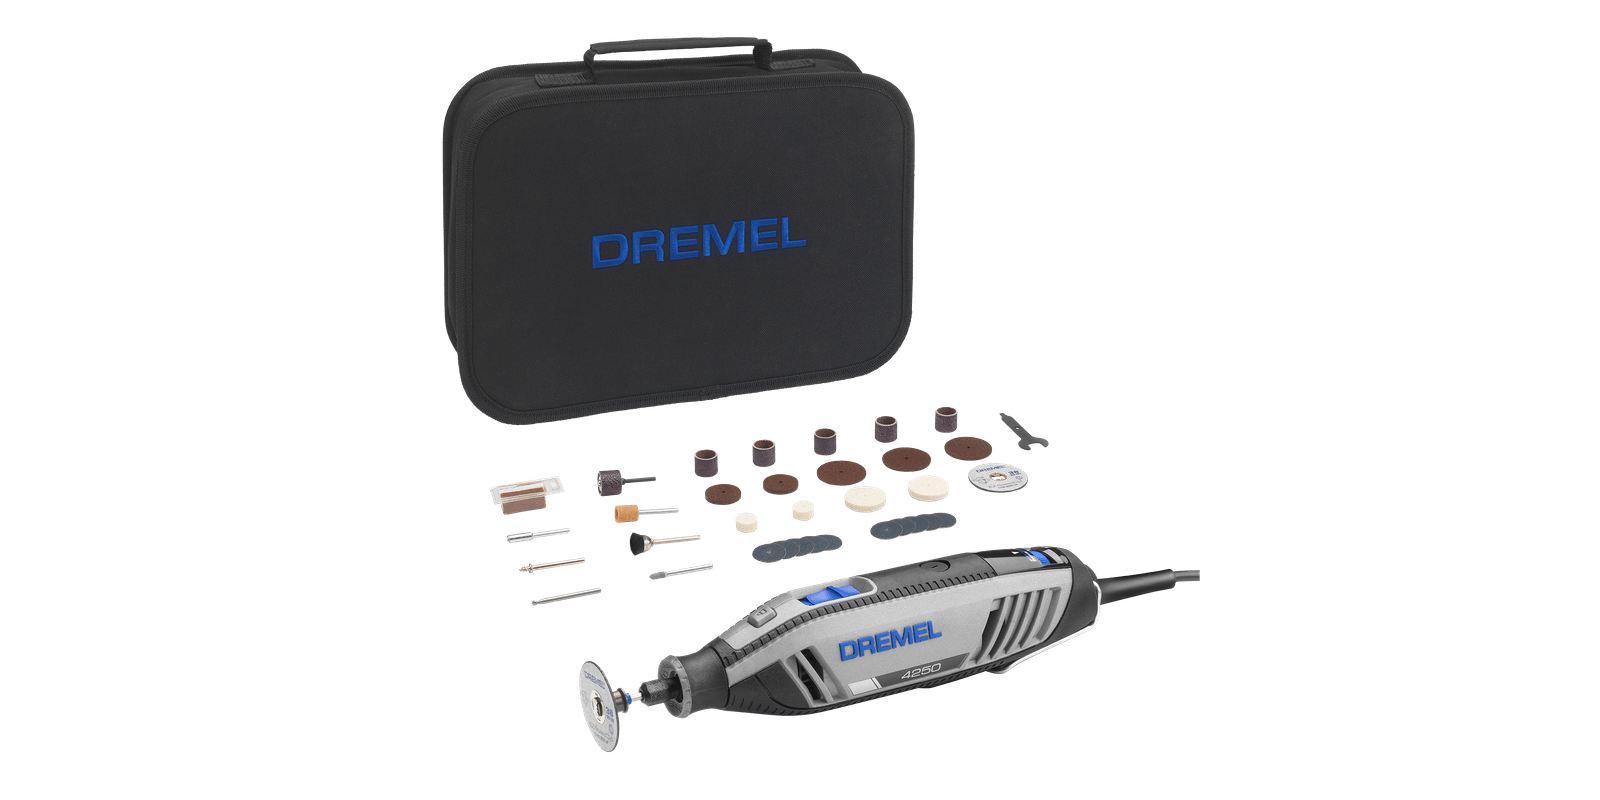 Dremel 4250-35 Rotary Tool Kit Set with 35pcs Accessories (175W)